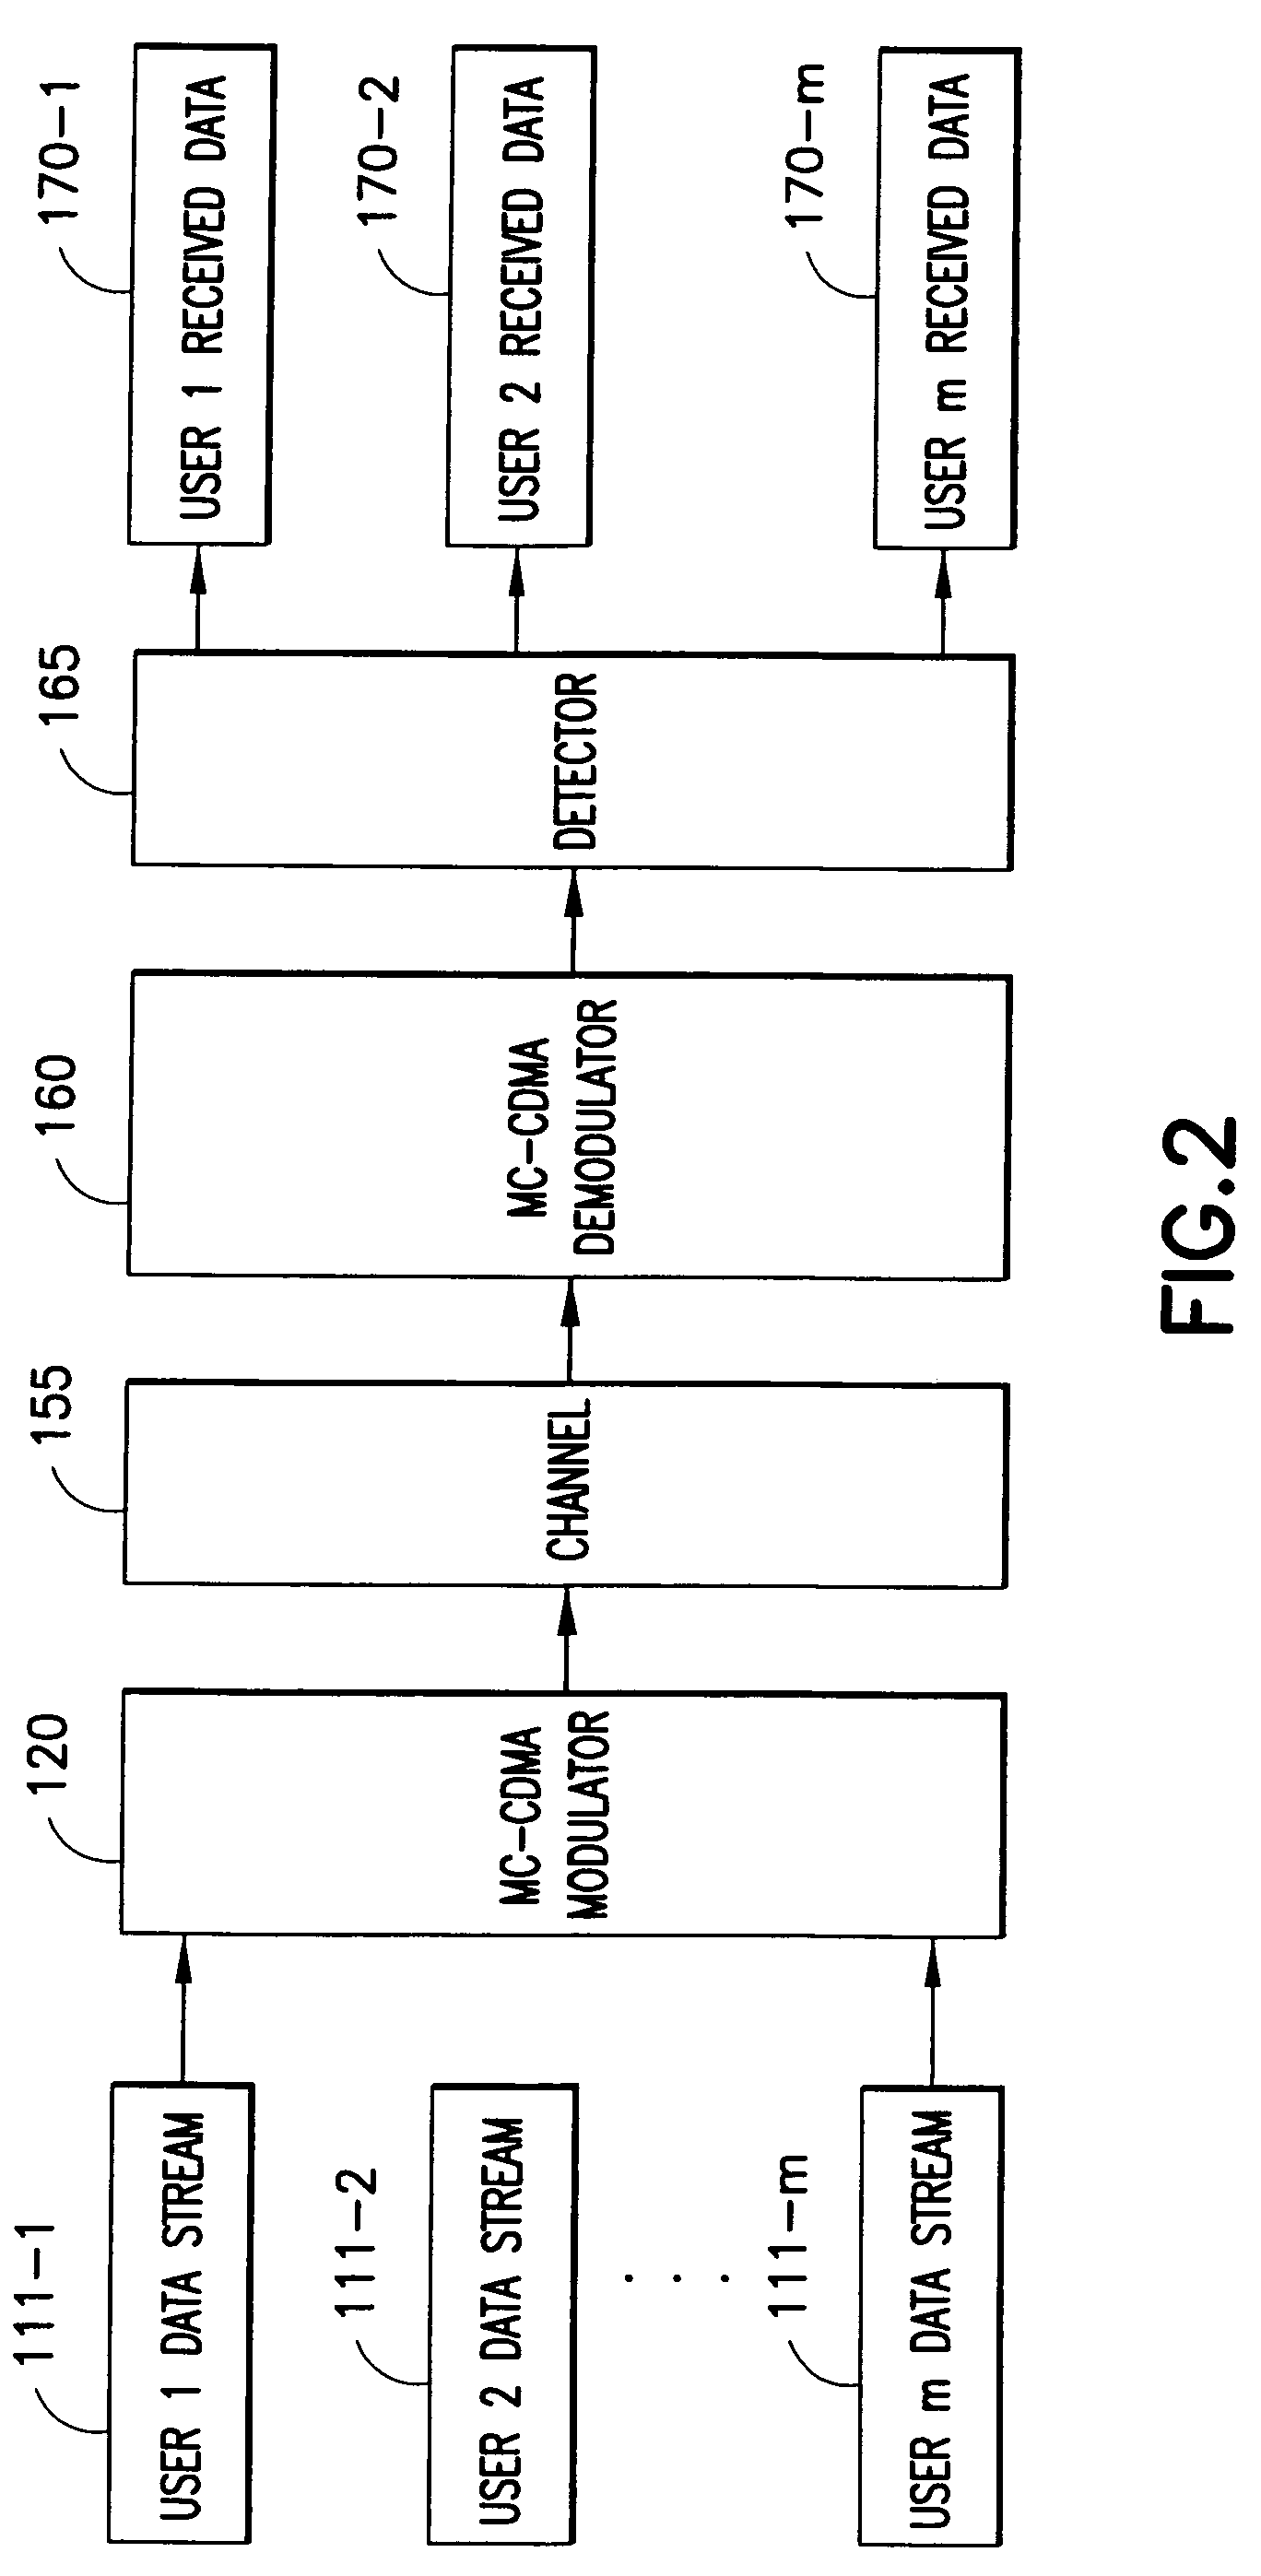 Multiple user adaptive modulation scheme for MC-CDMA